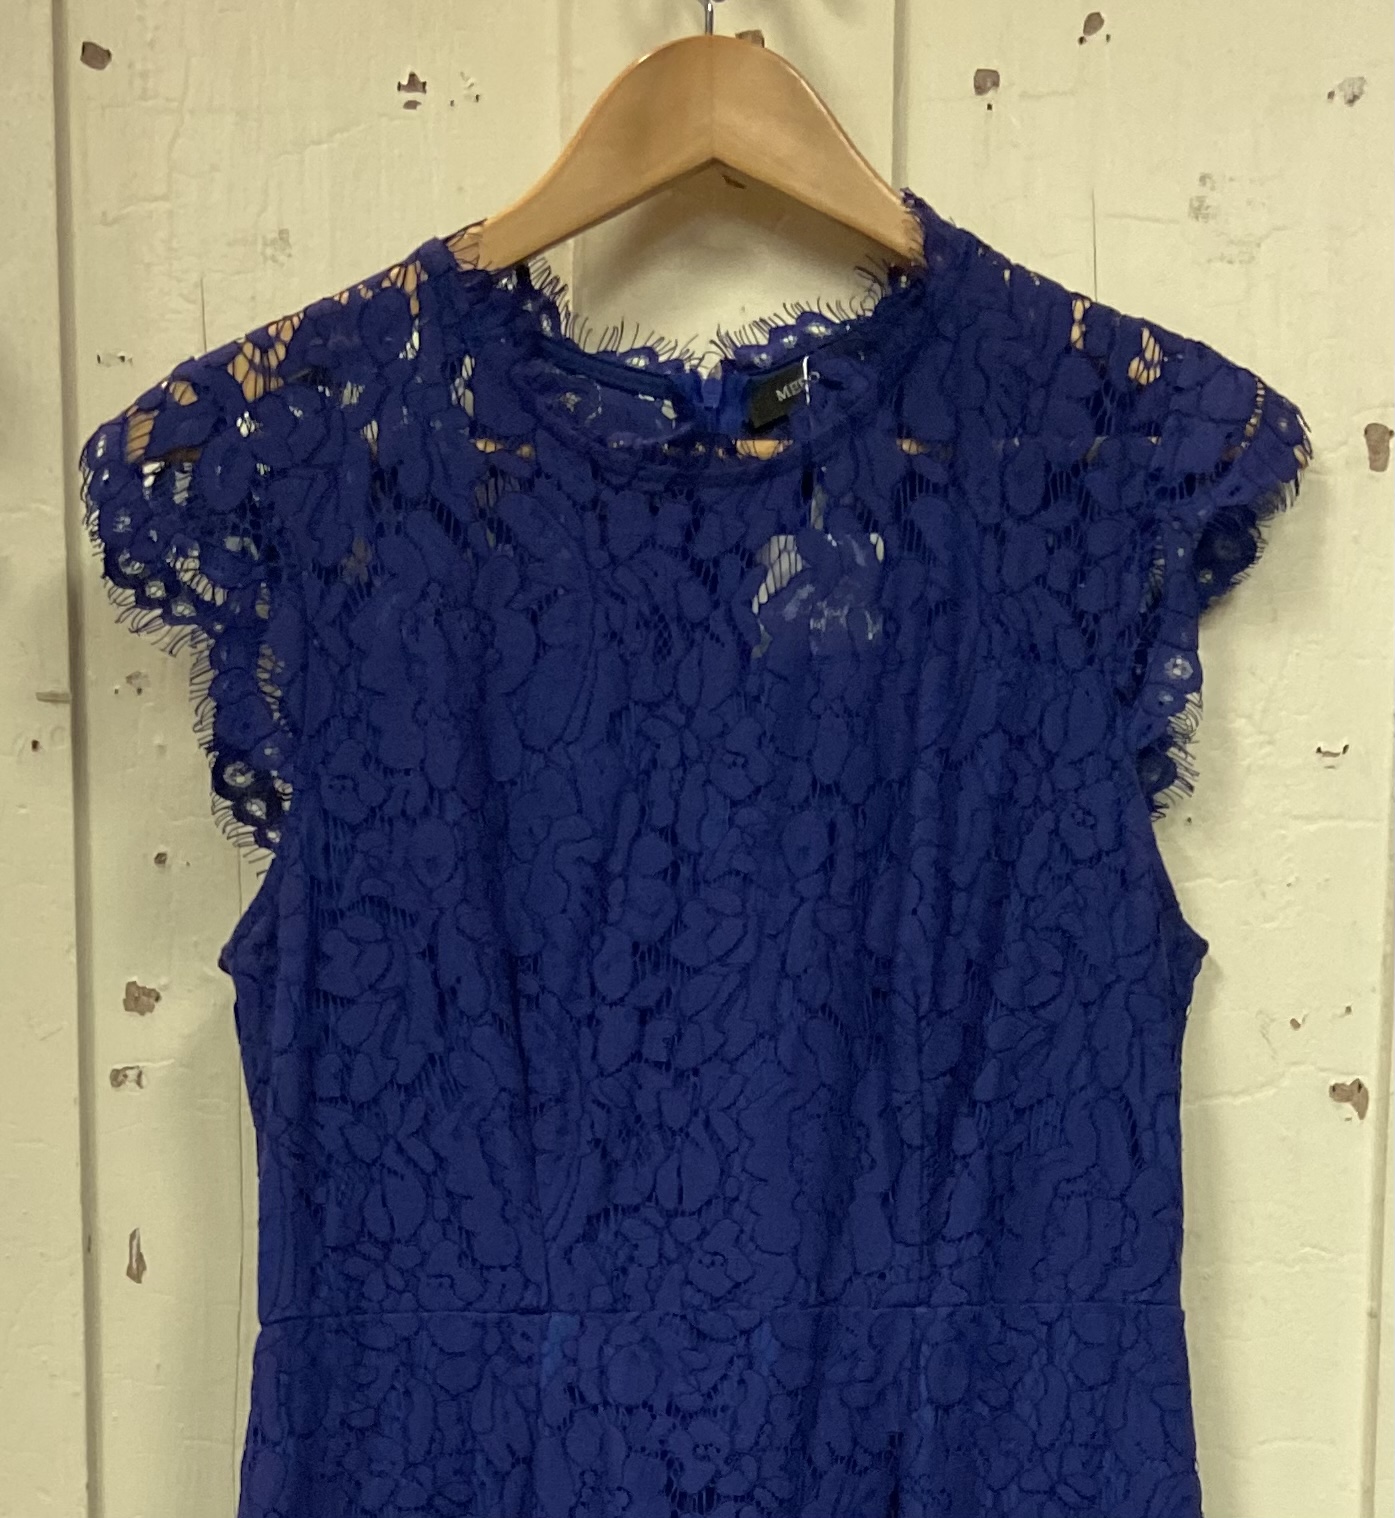 NWT Periw Lace Dress
Periwink
Size: Medium